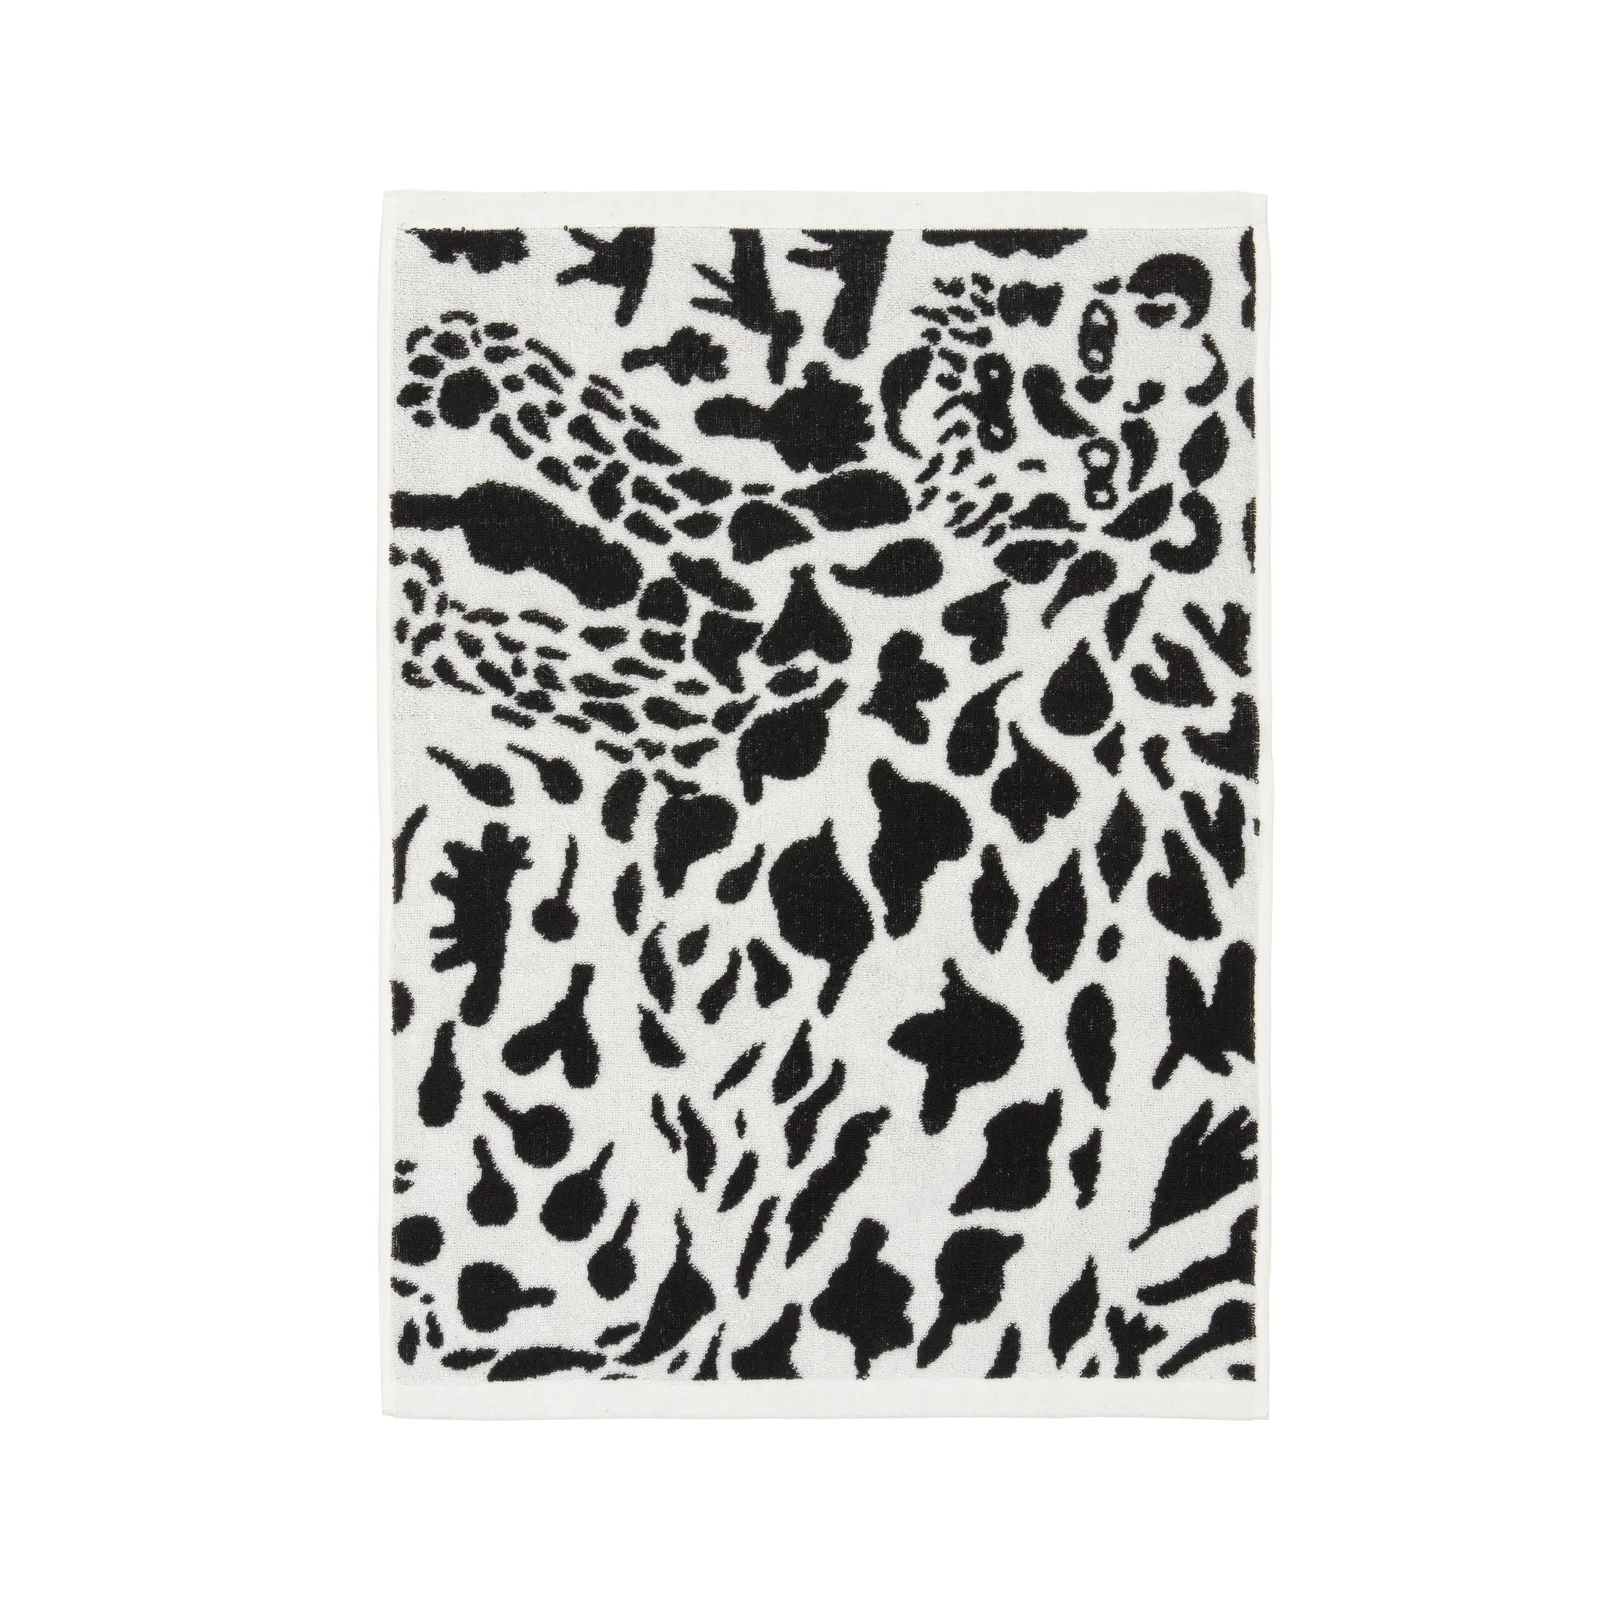 Asciugamano da bagno OTC 70x140cm Cheetah nero bianco